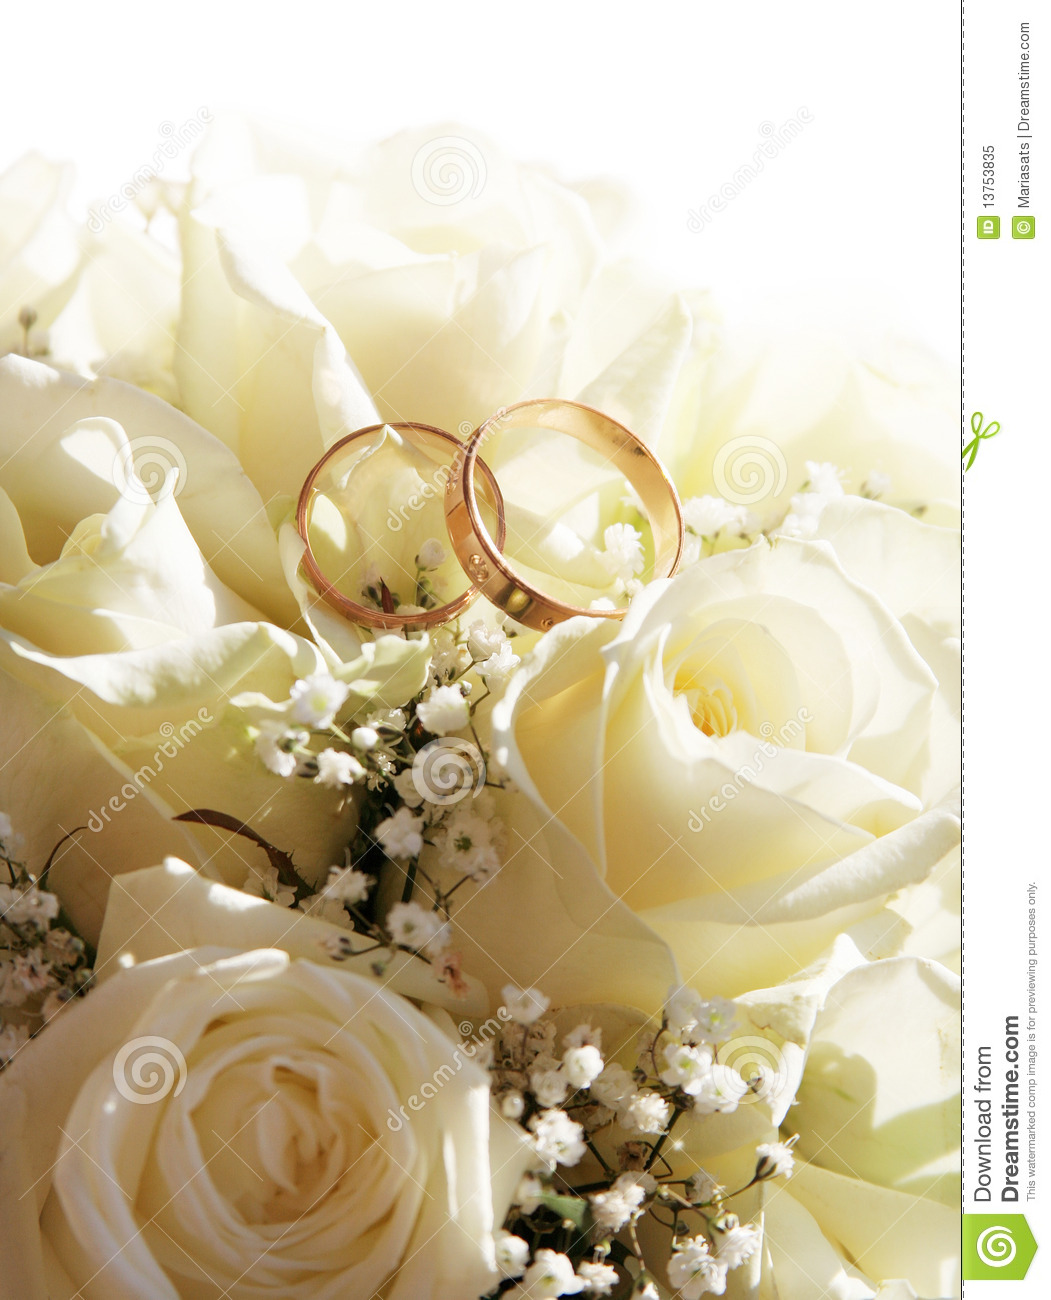 Wedding Background Free Stock Images for Photoshop